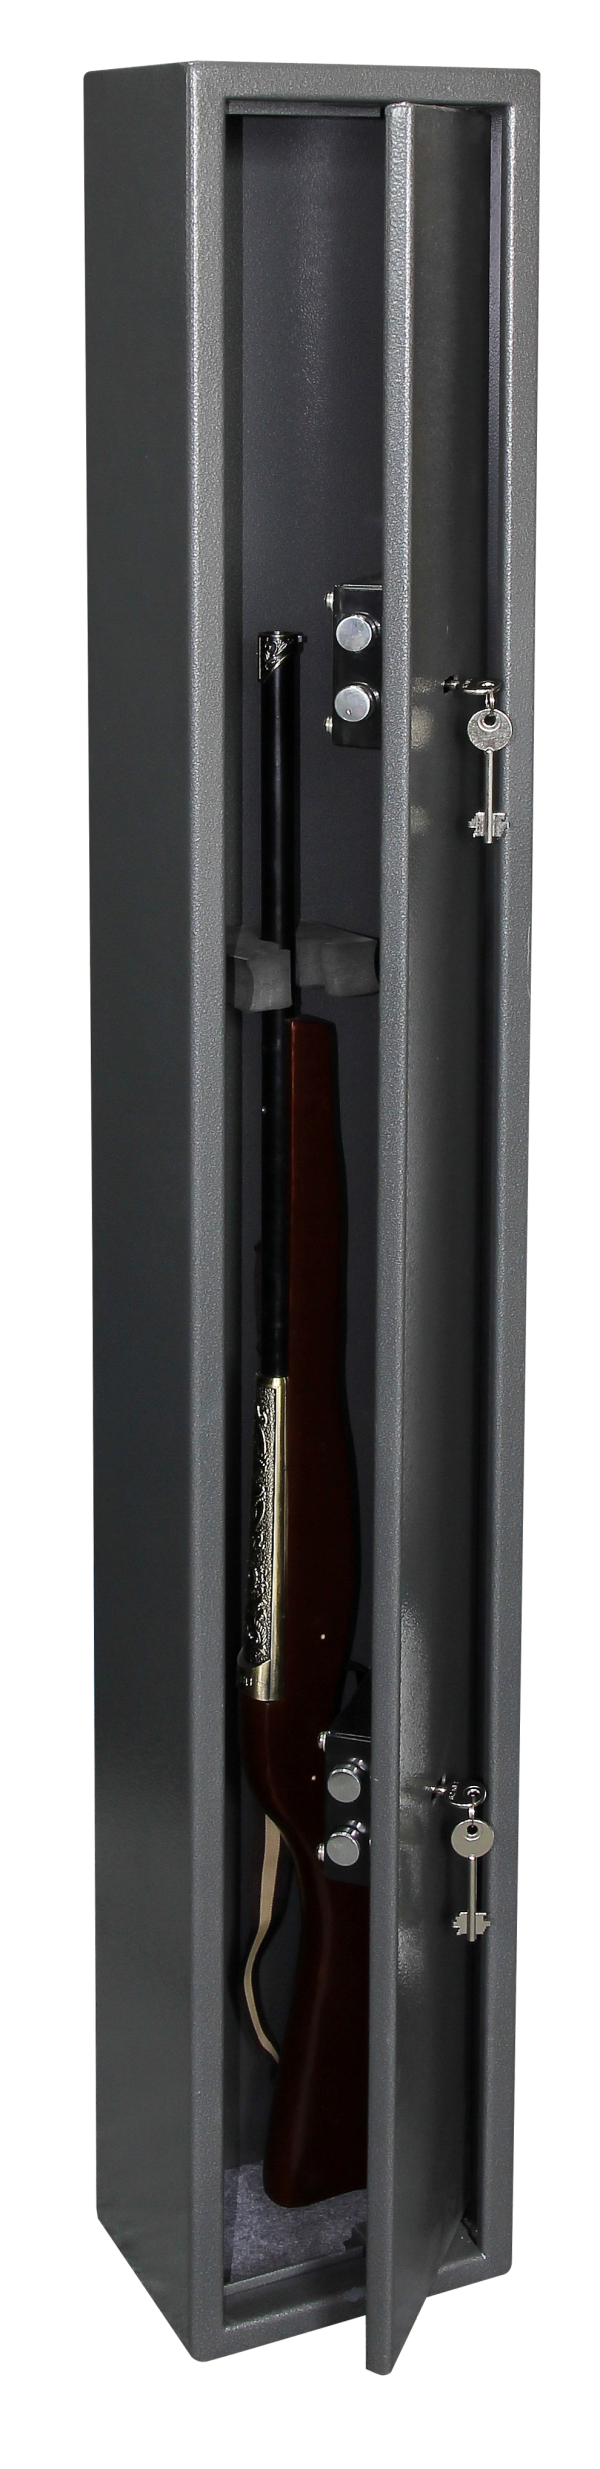 Phoenix Lacerta GS8000K 1 Gun Safe with 2 Key Locks